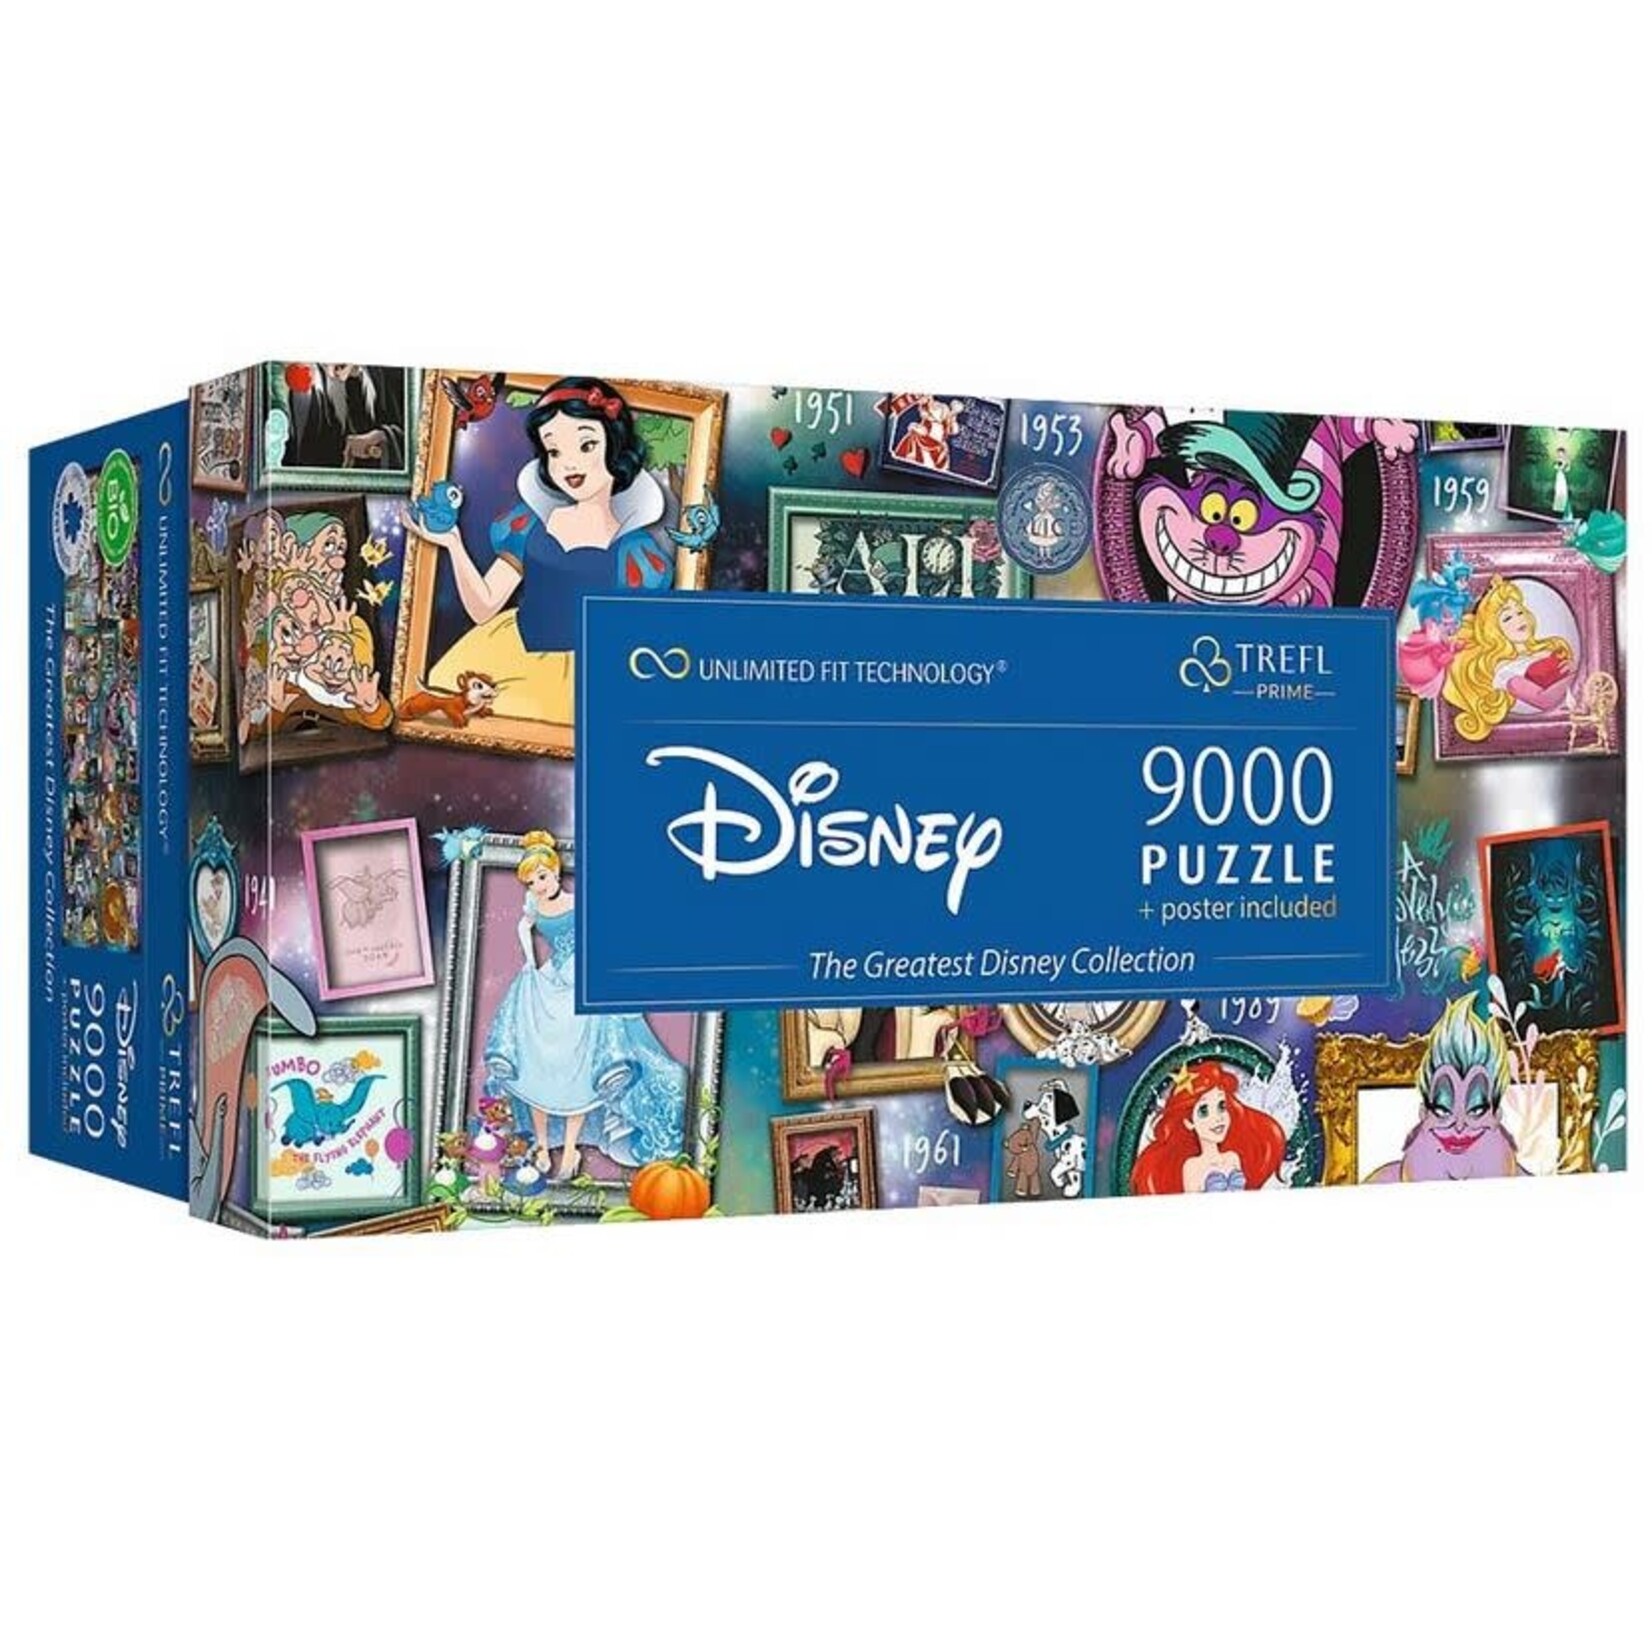 Trefl Disney The Greatest Disney Collection 9000 Piece Puzzle (Trefl Prime)